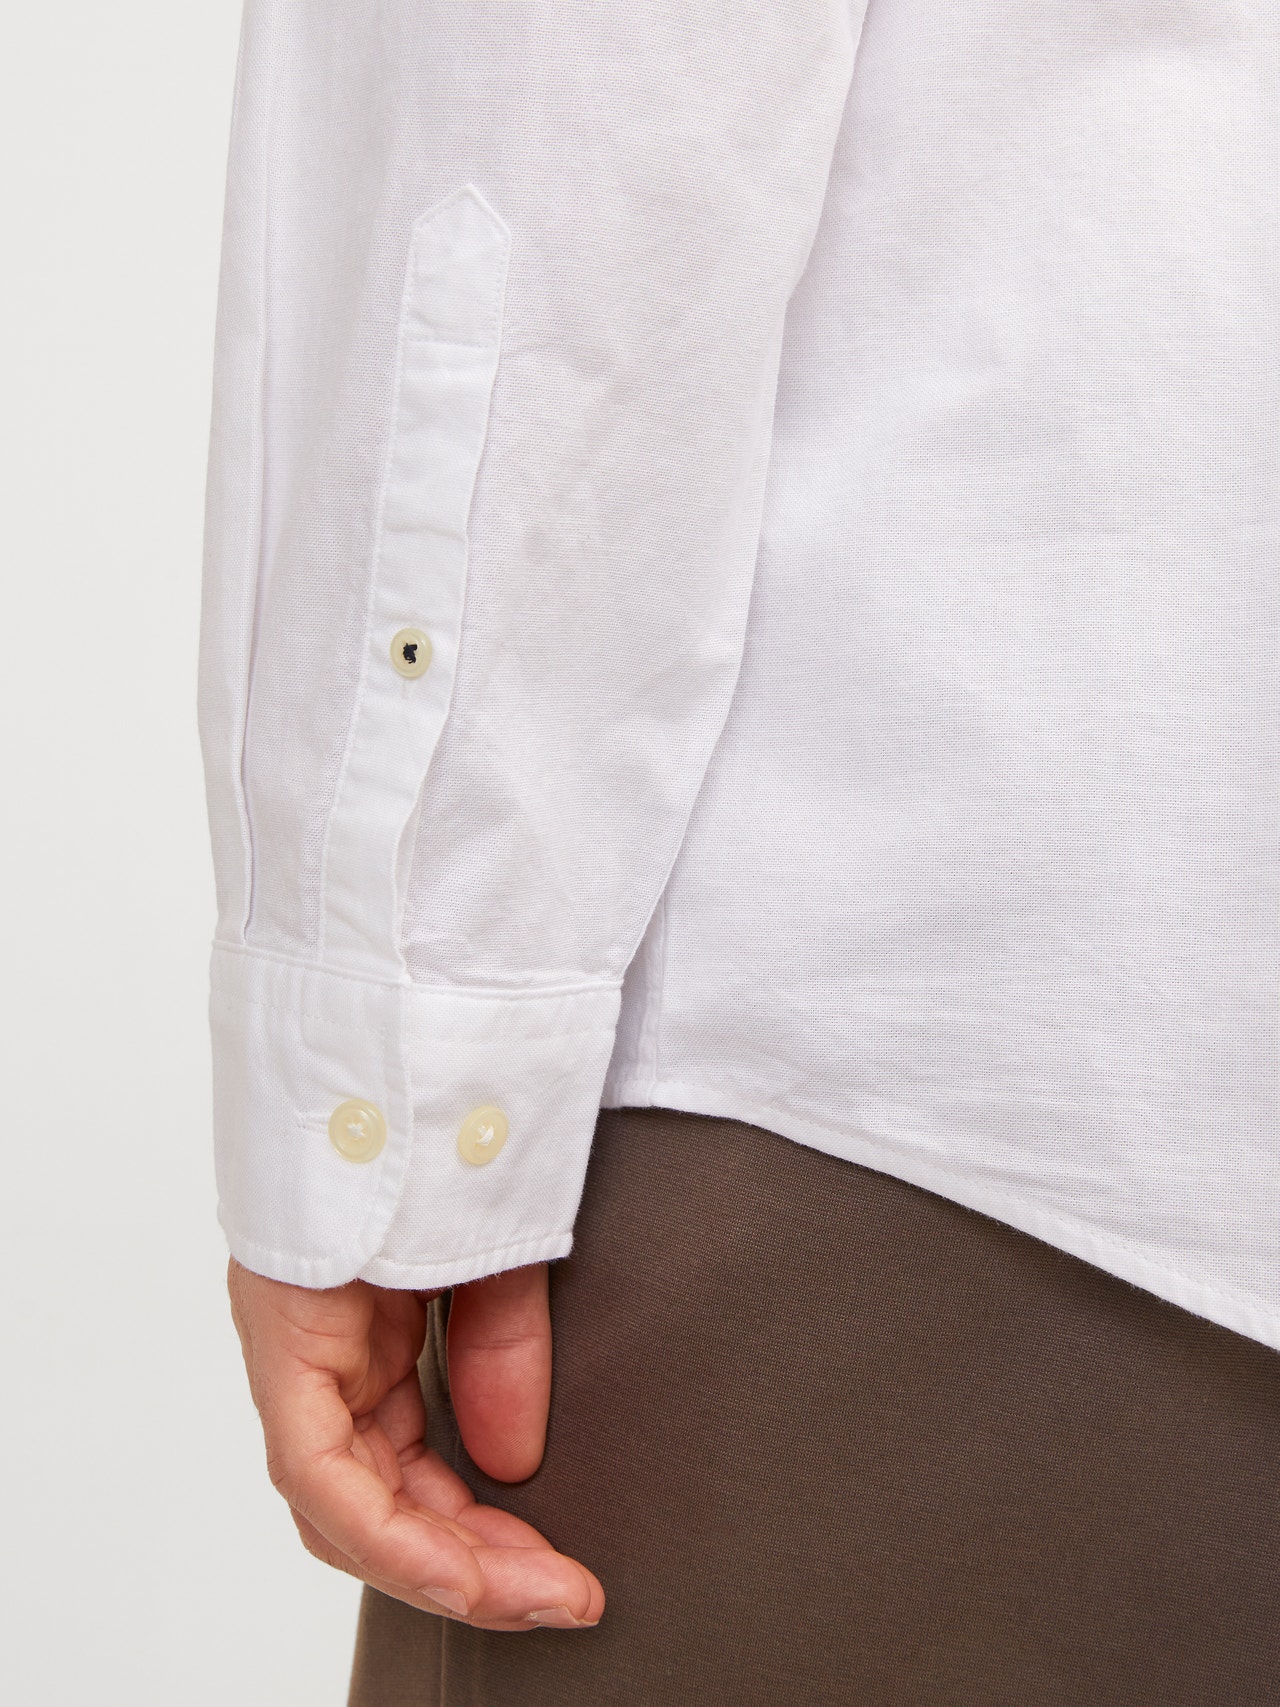 Jack & Jones Camisa informal Slim Fit -White - 12182486